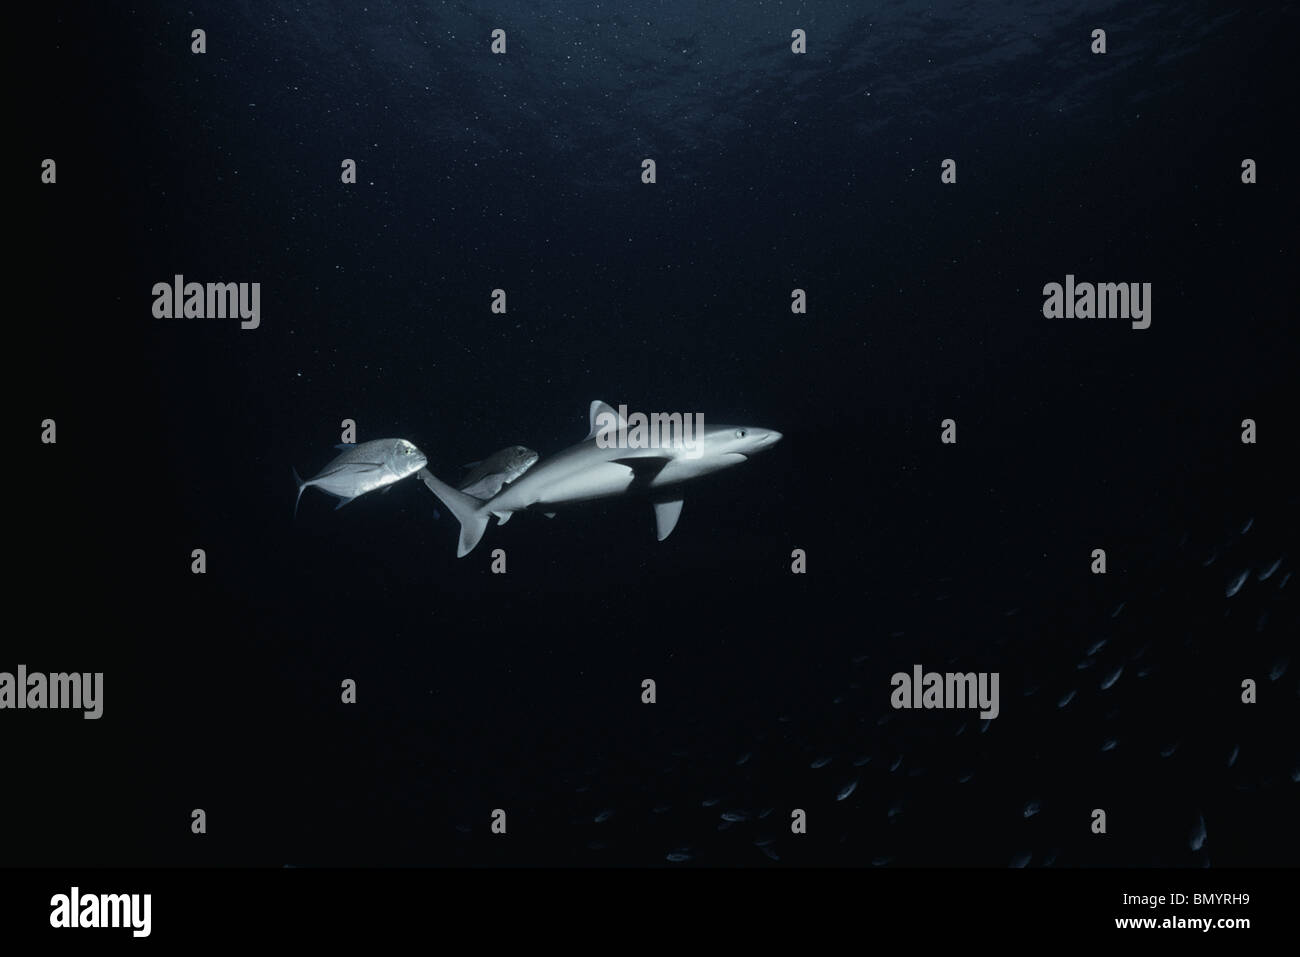 San jose sharks hi-res stock photography and images - Alamy